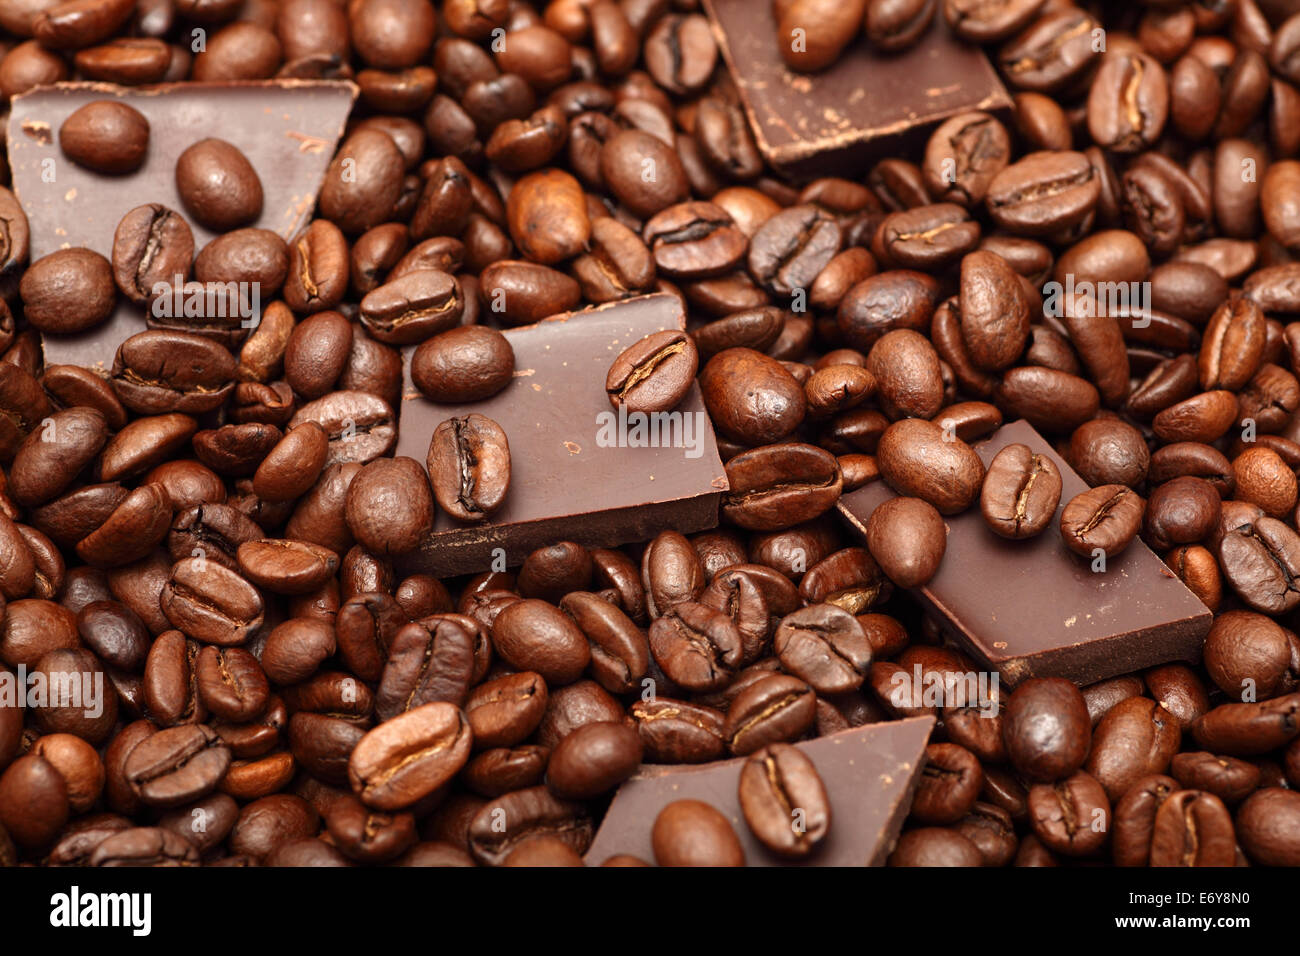 Coffee beans and chocolate closeup. Stock Photo